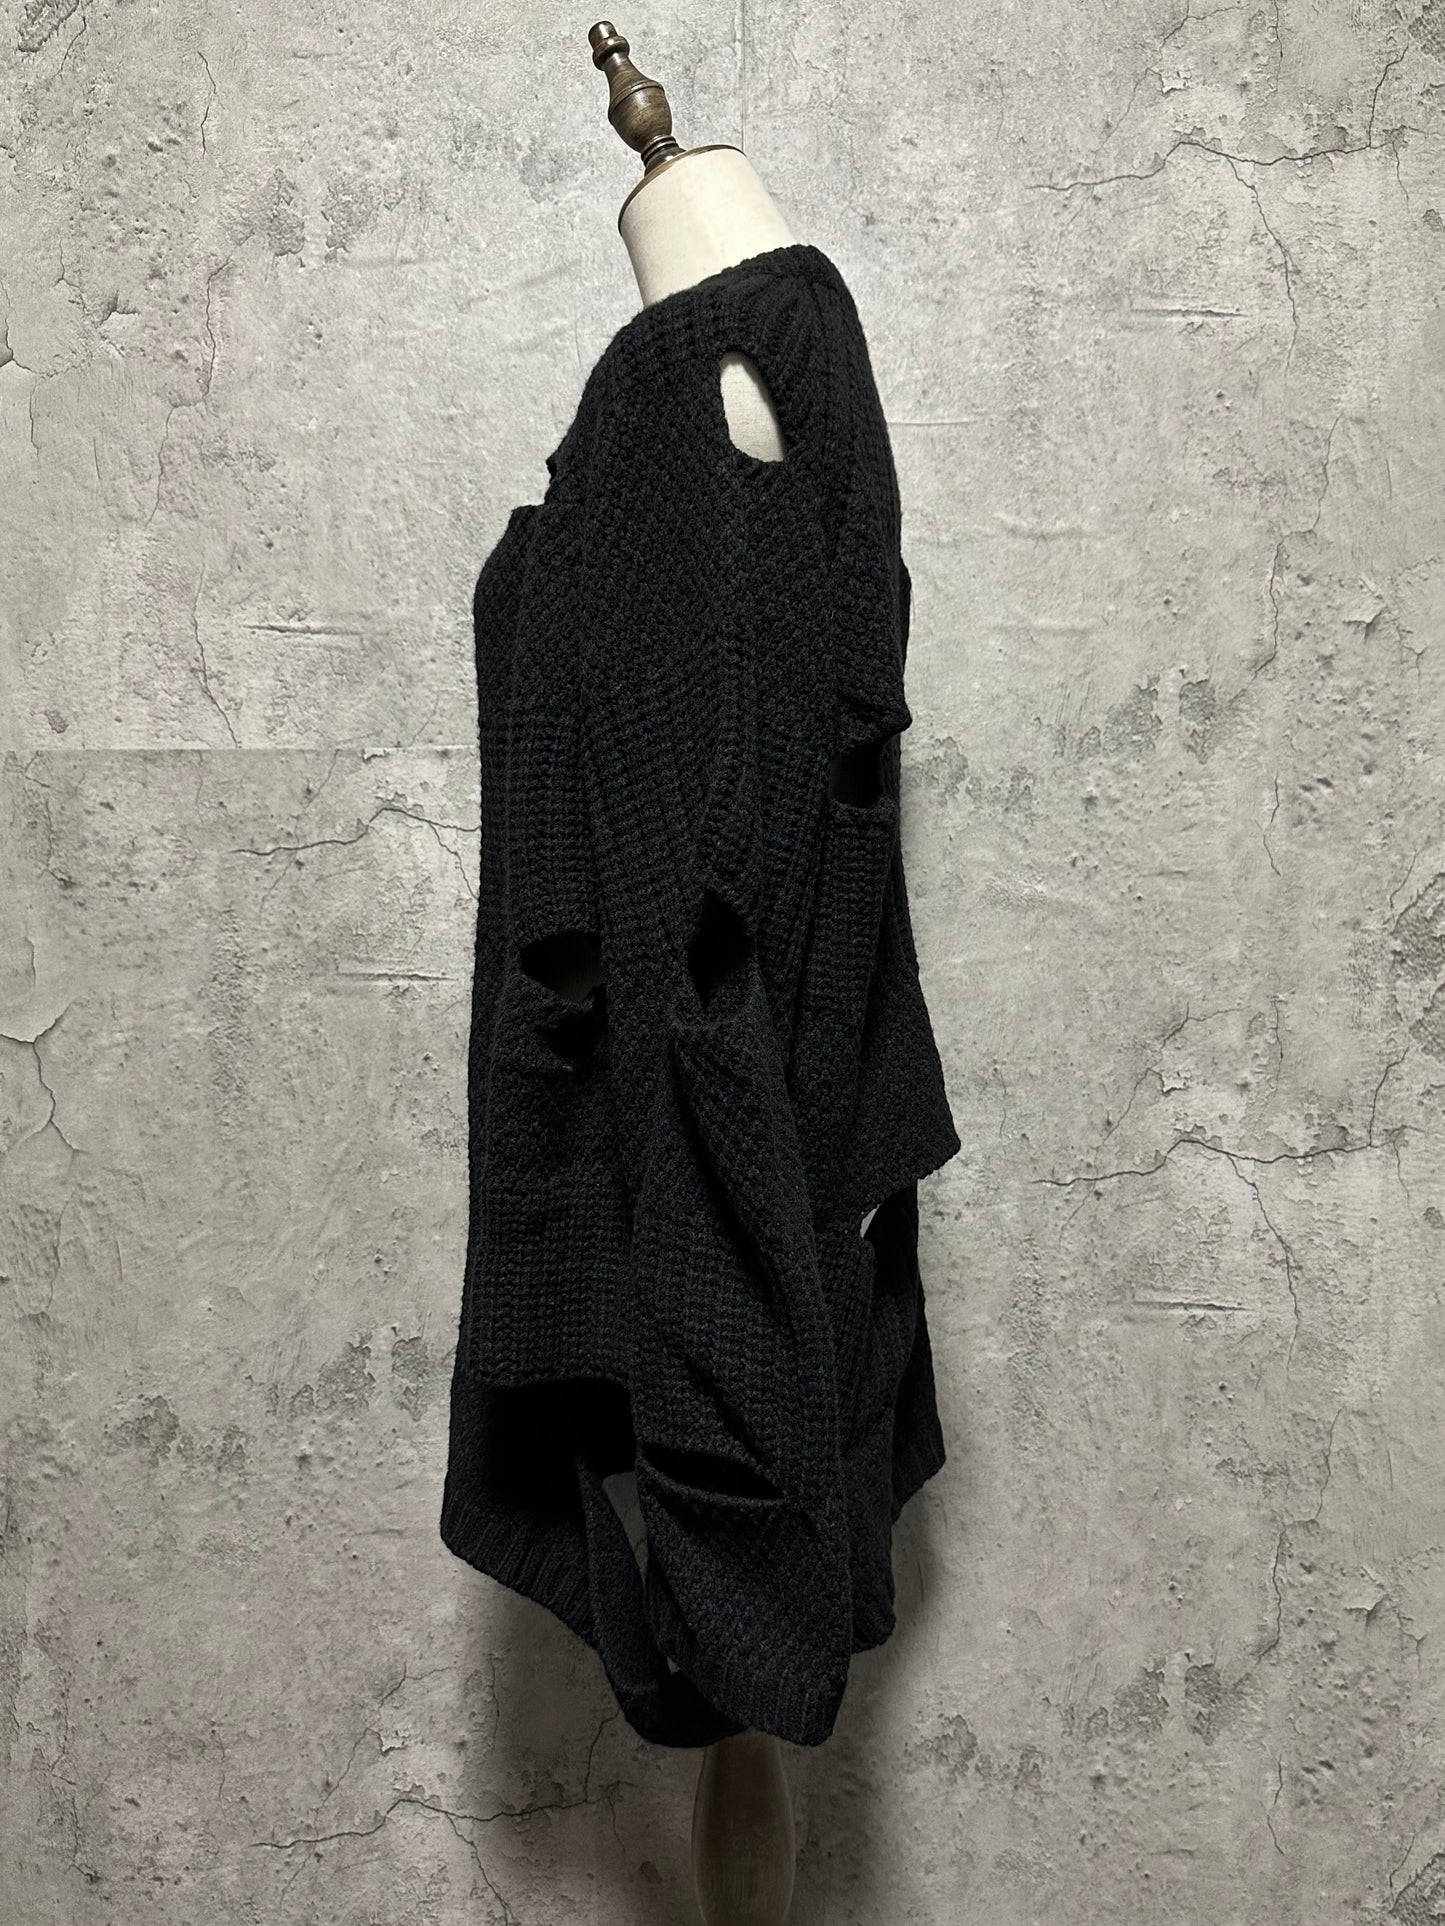 Maison MIHARA YASUHIRO Perforated knit sweater 18AW